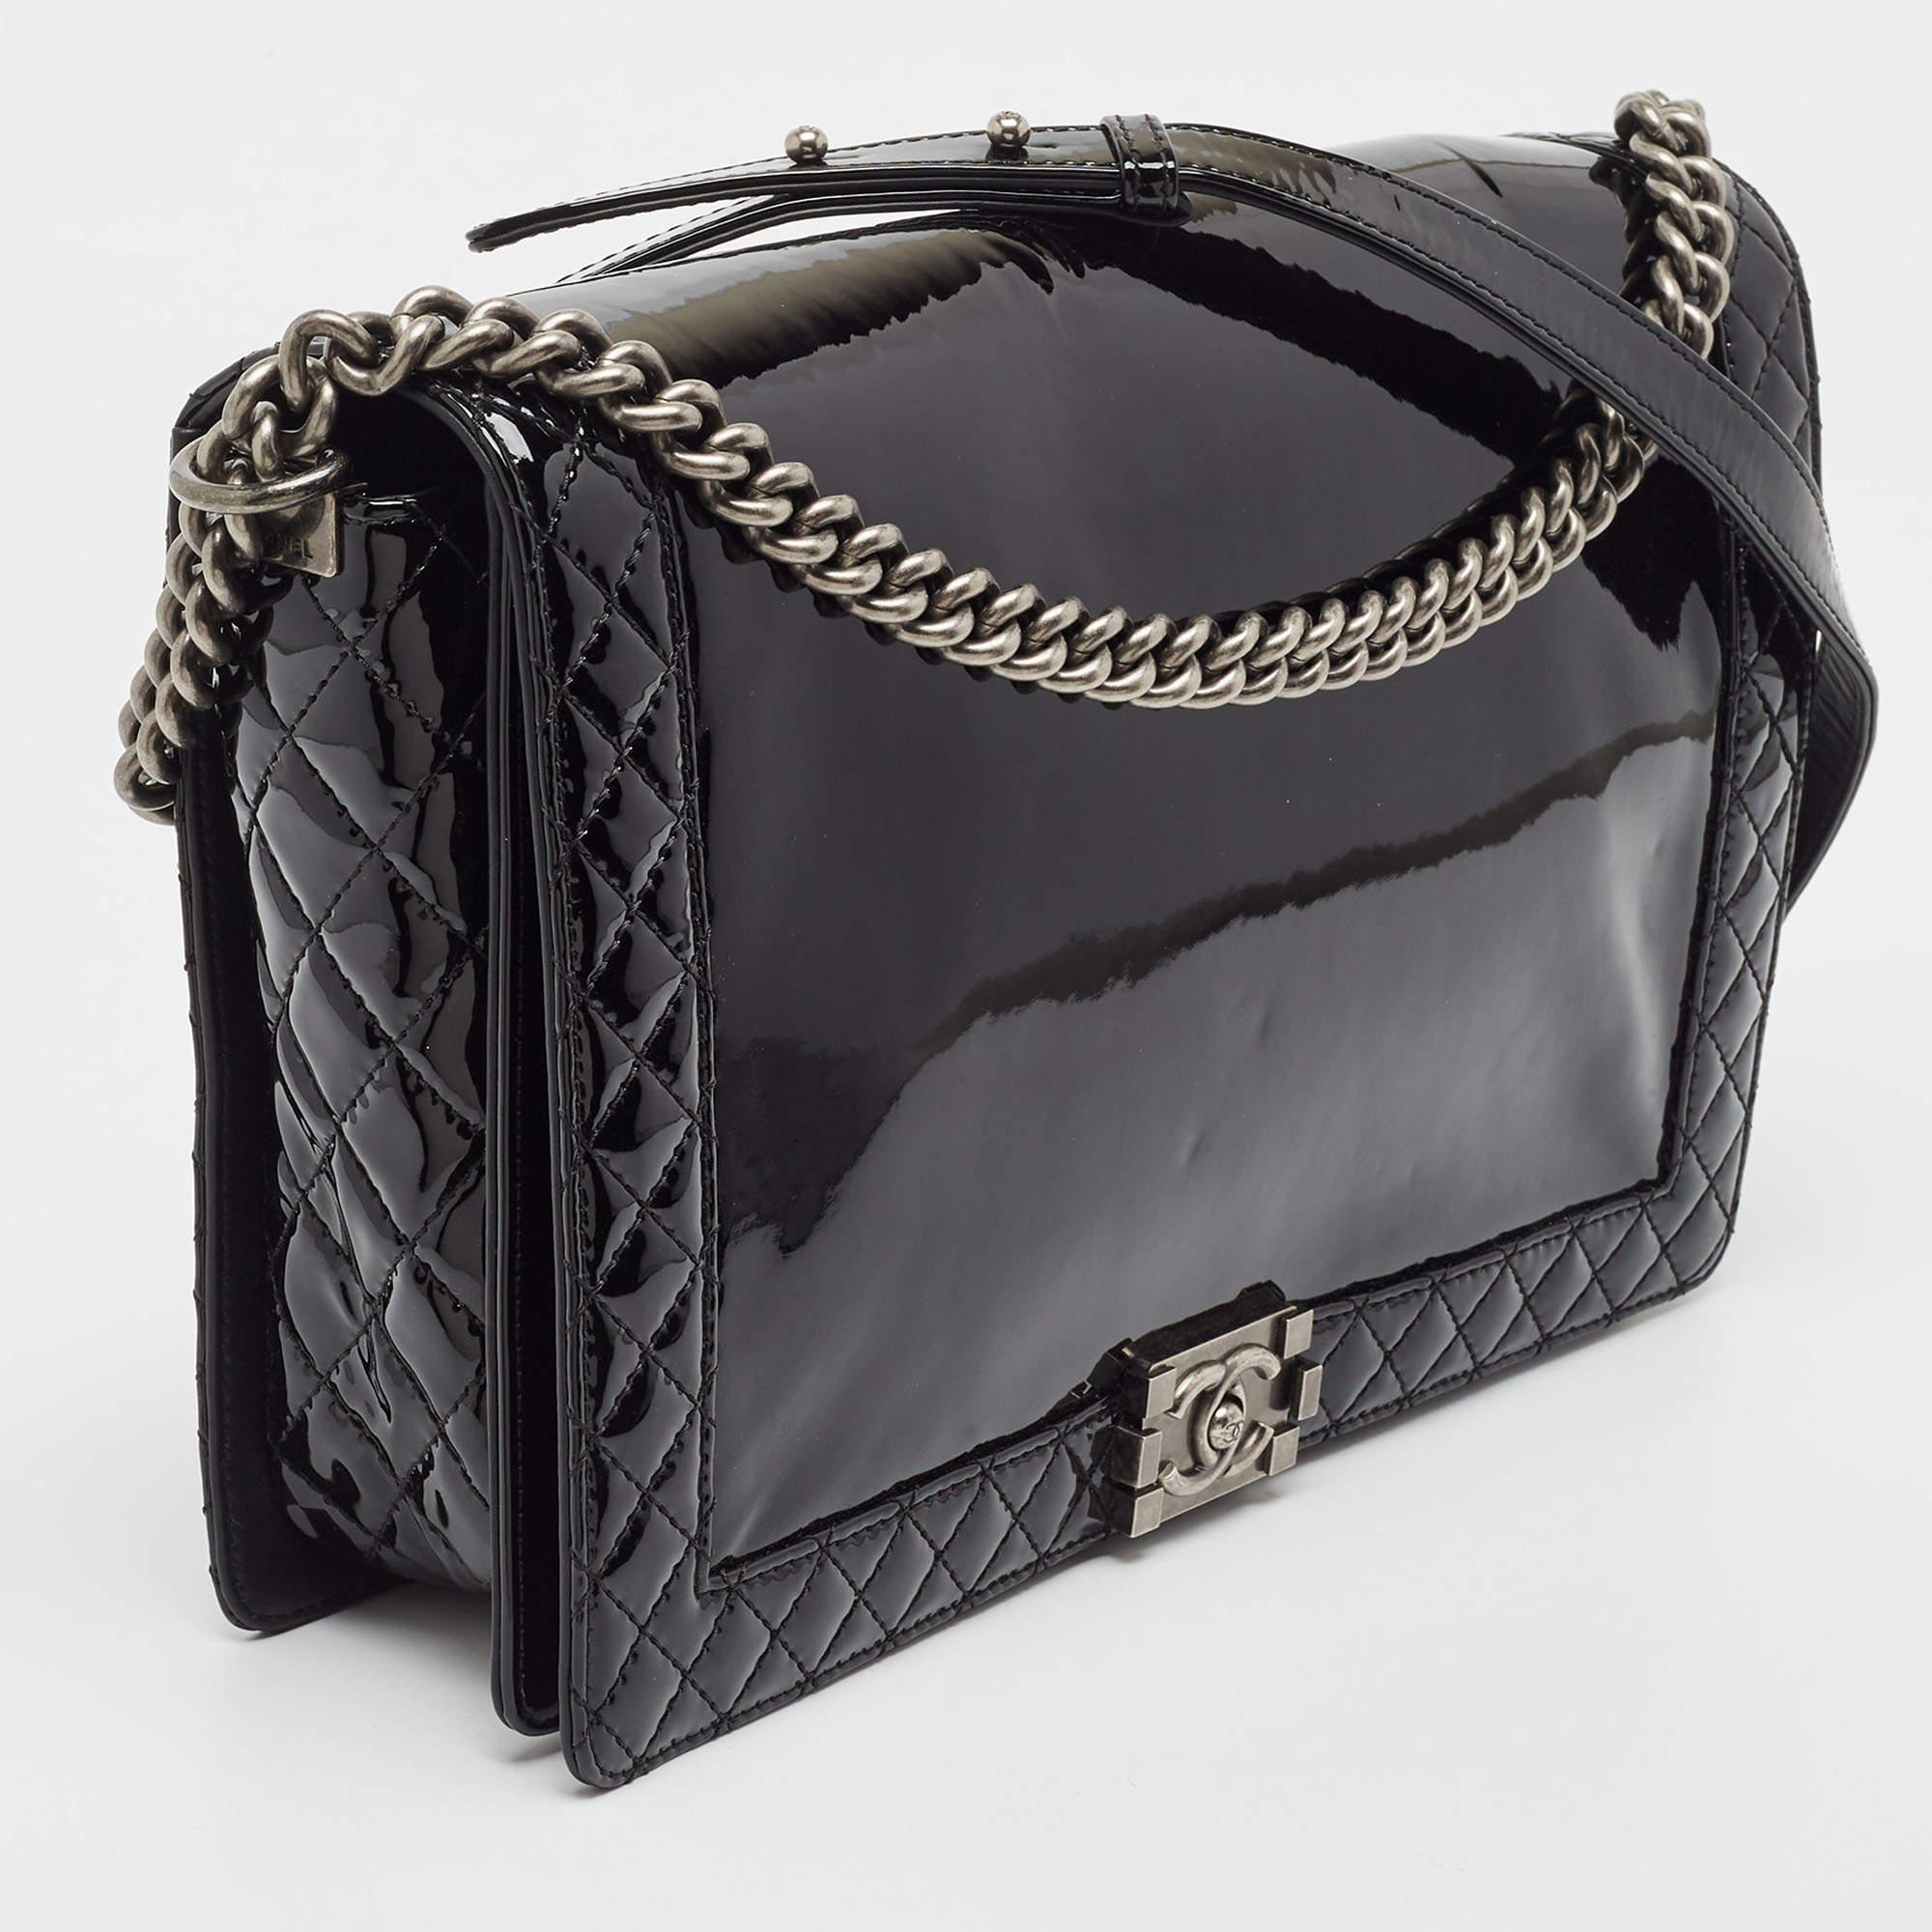 Chanel Black Patent Leather Large Reverso Boy Flap Bag In Good Condition For Sale In Dubai, Al Qouz 2